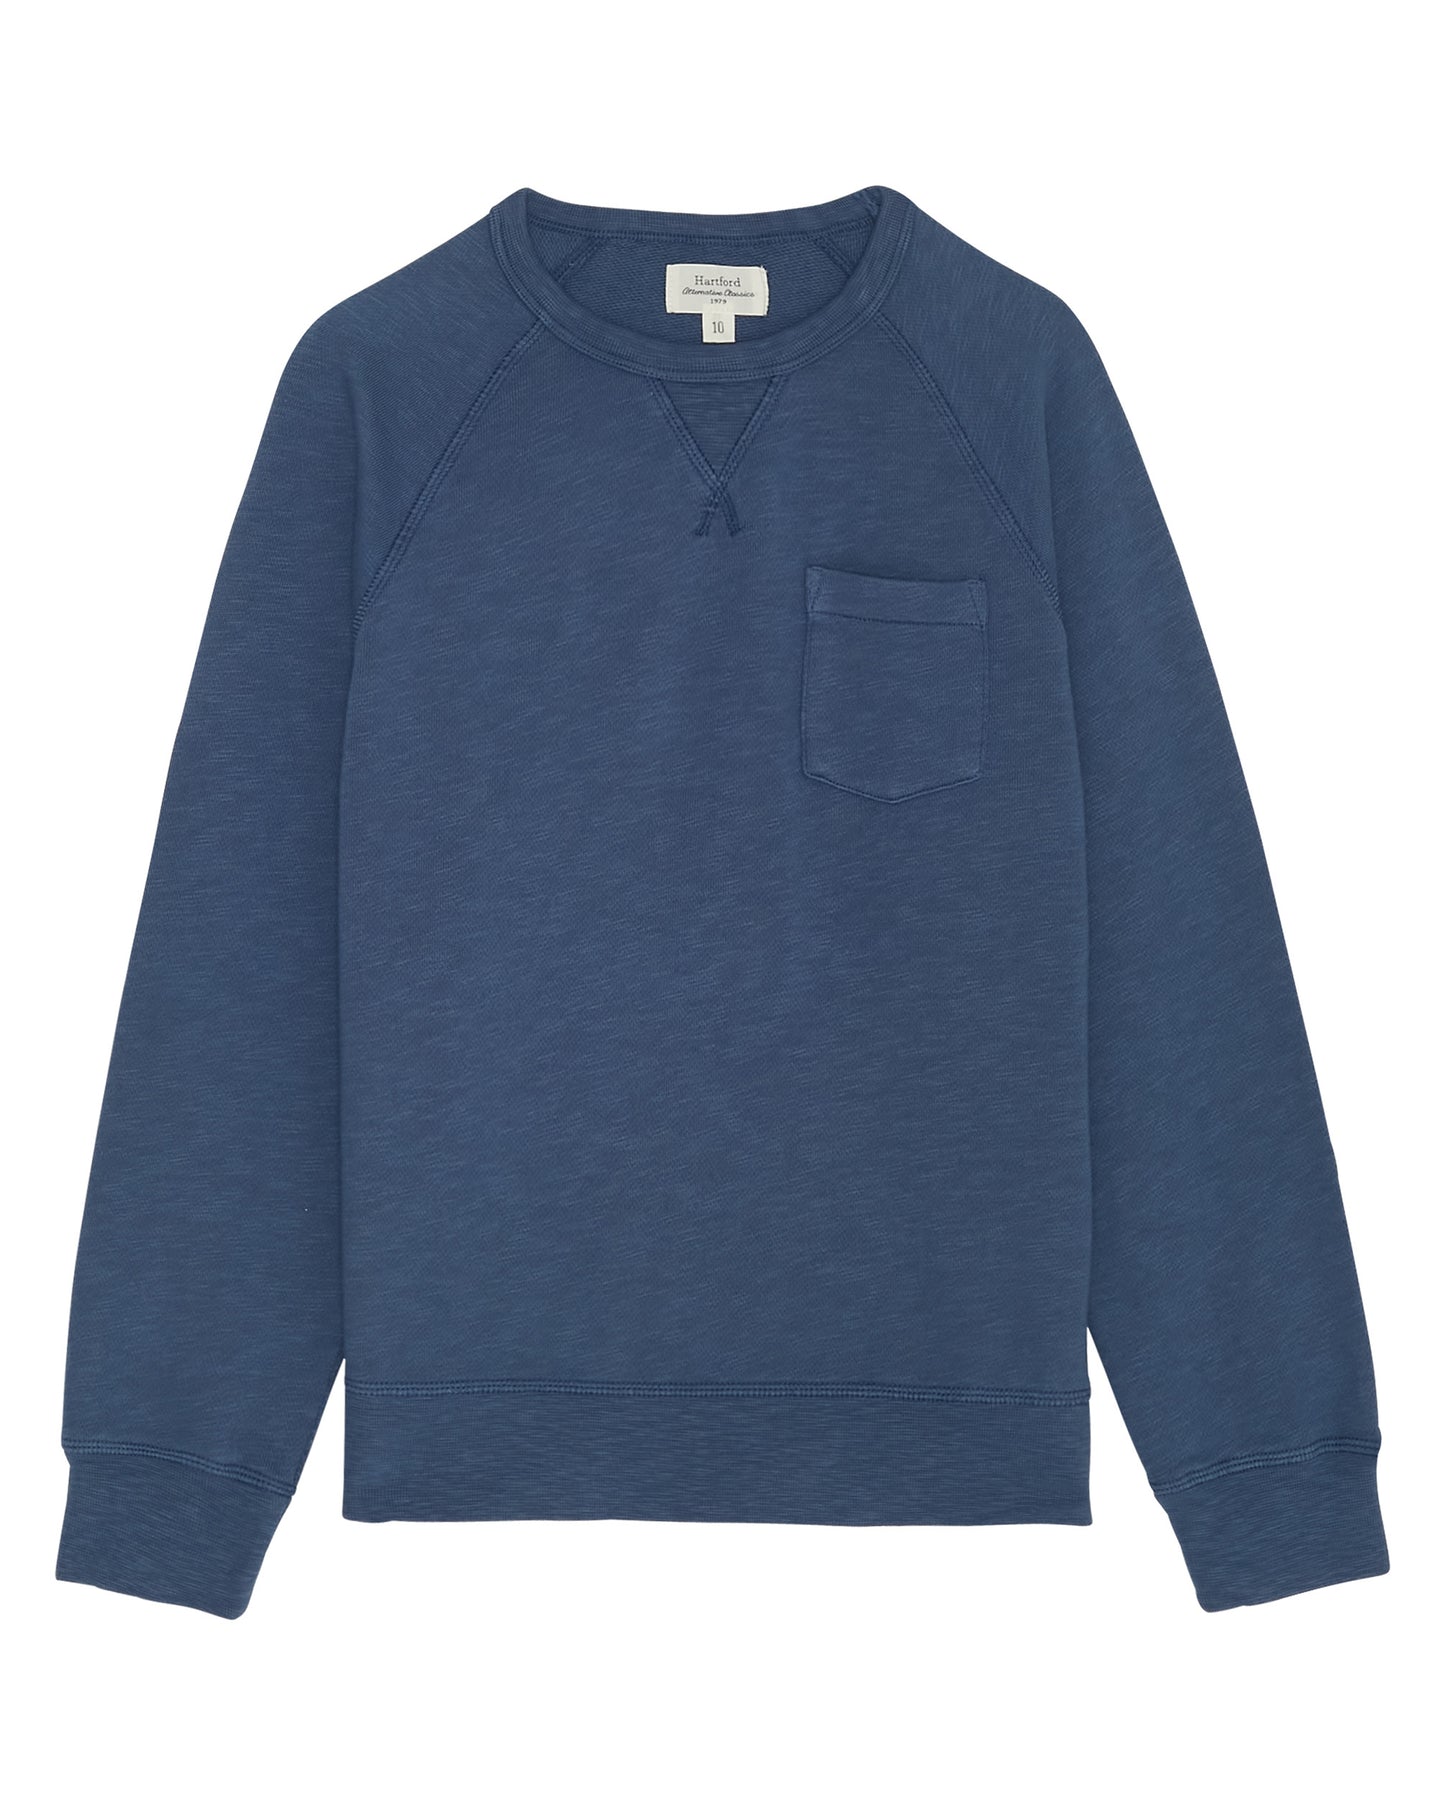 Boys' Cobalt Blue Cotton Sweatshirt